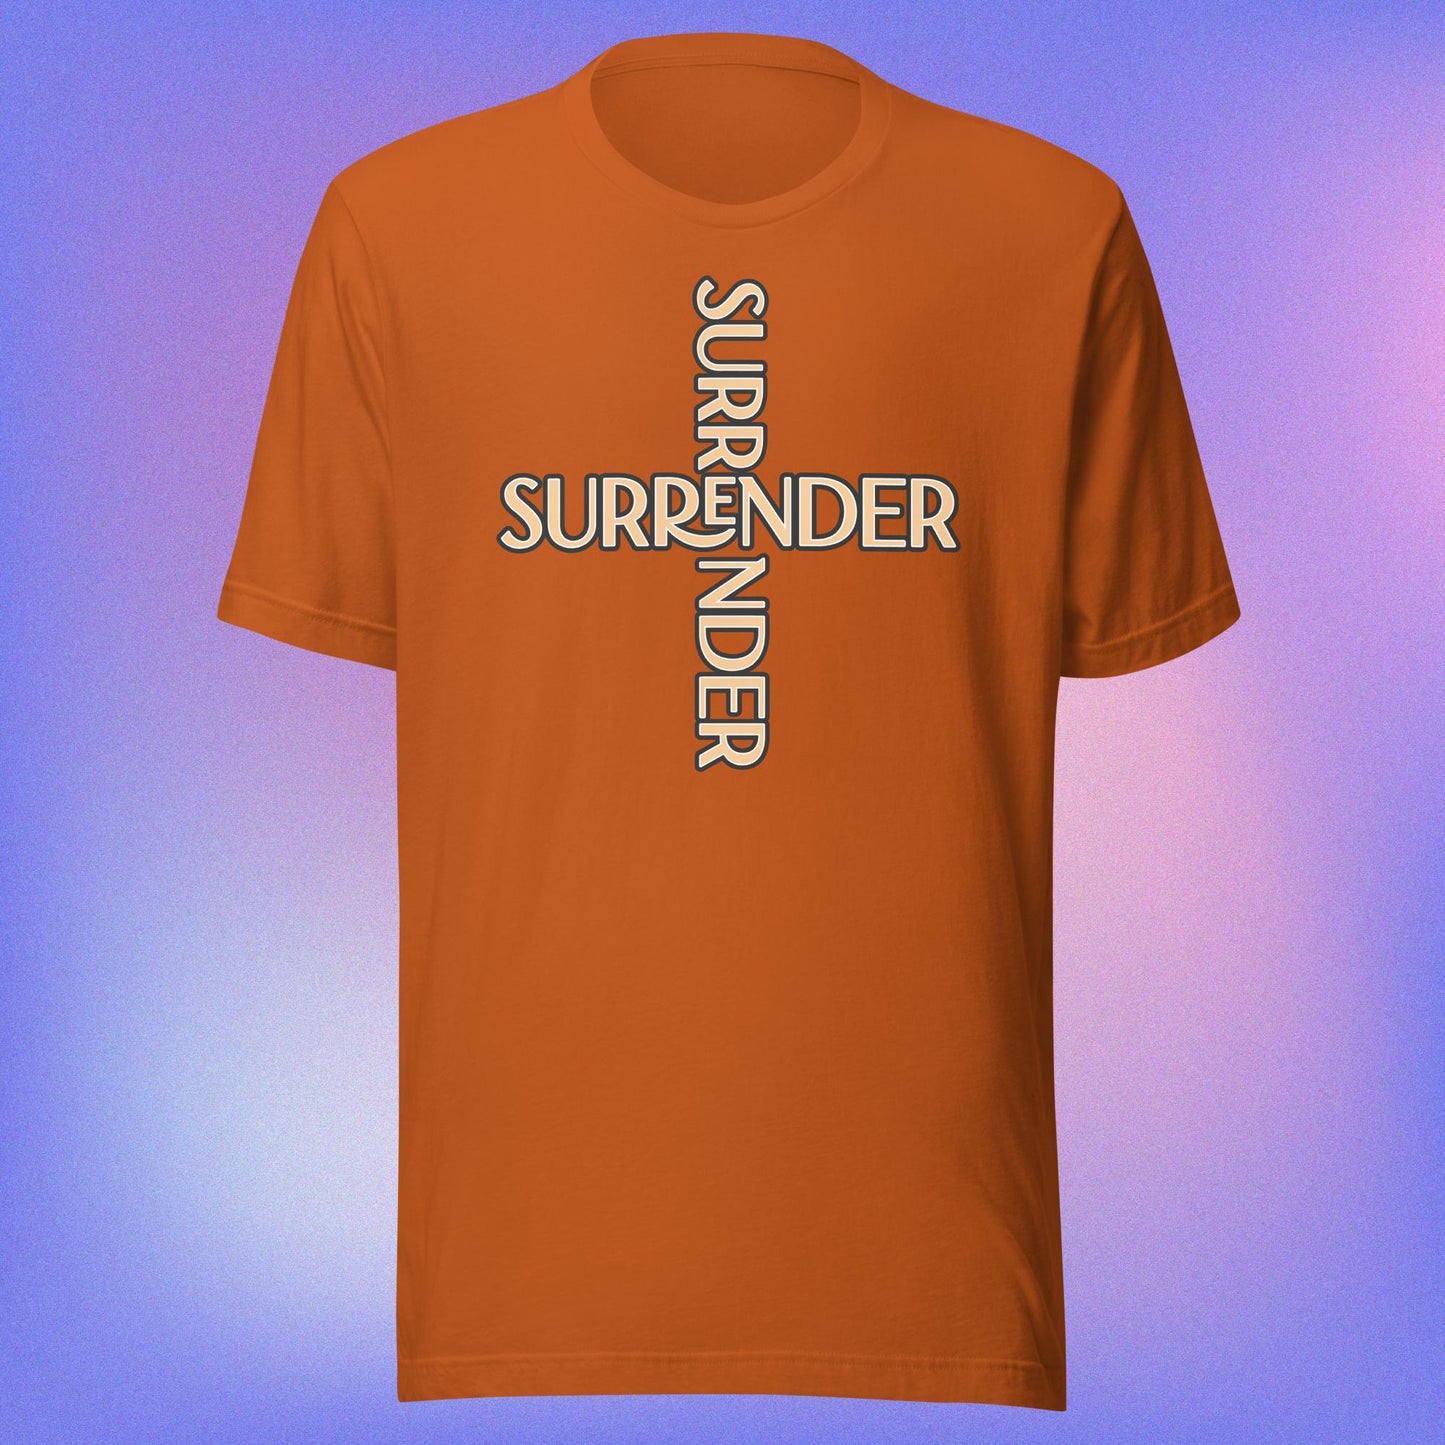 "SURRENDER" Unisex t-shirt